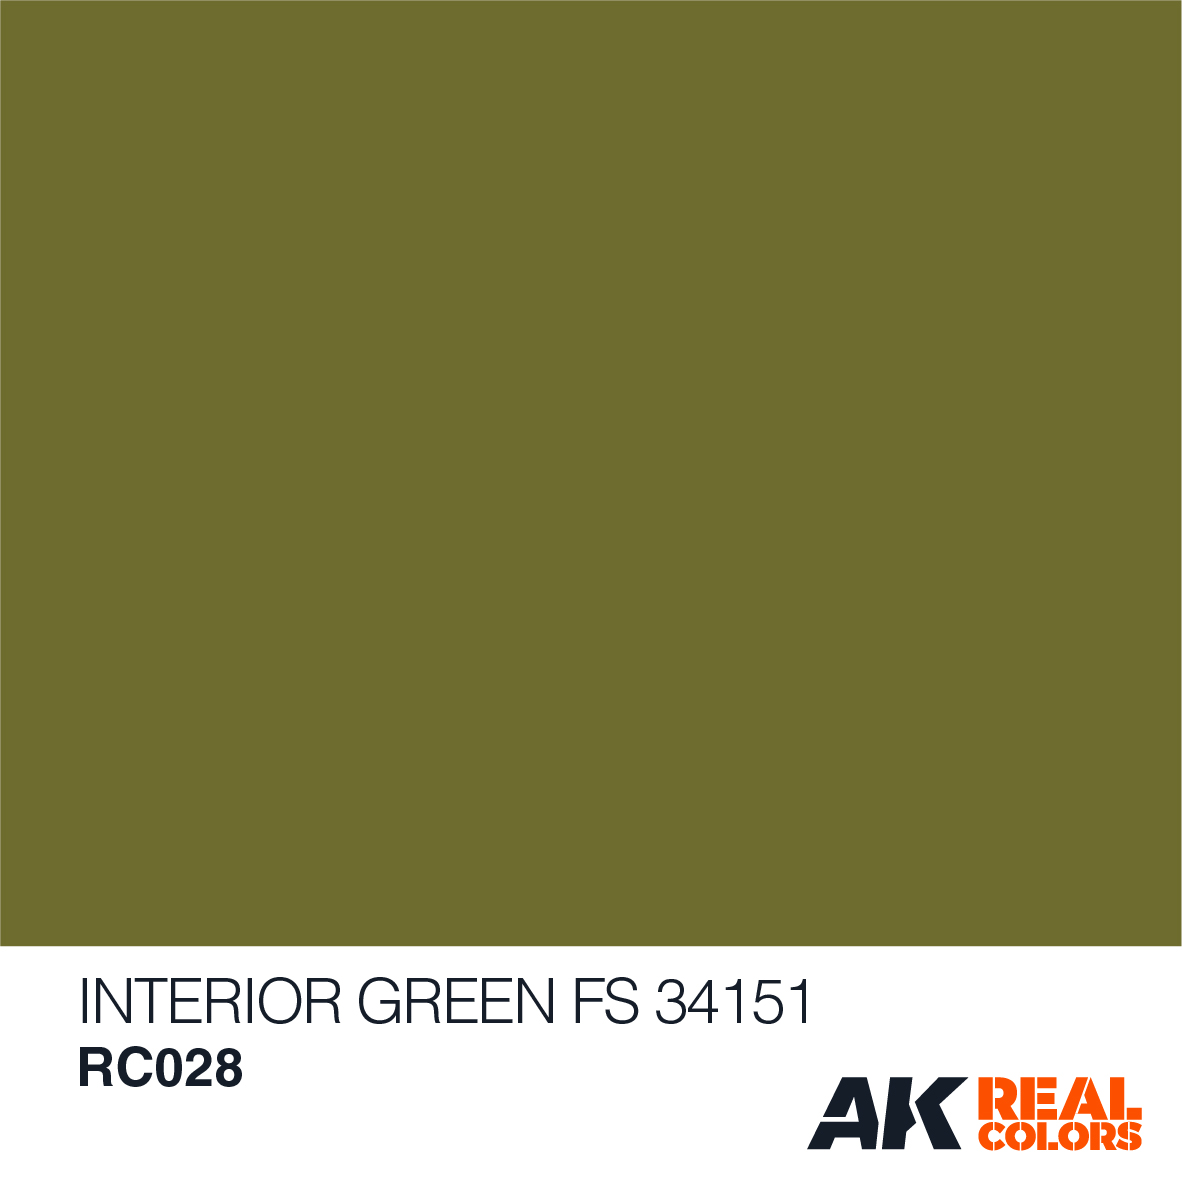 Interior Green FS 34151